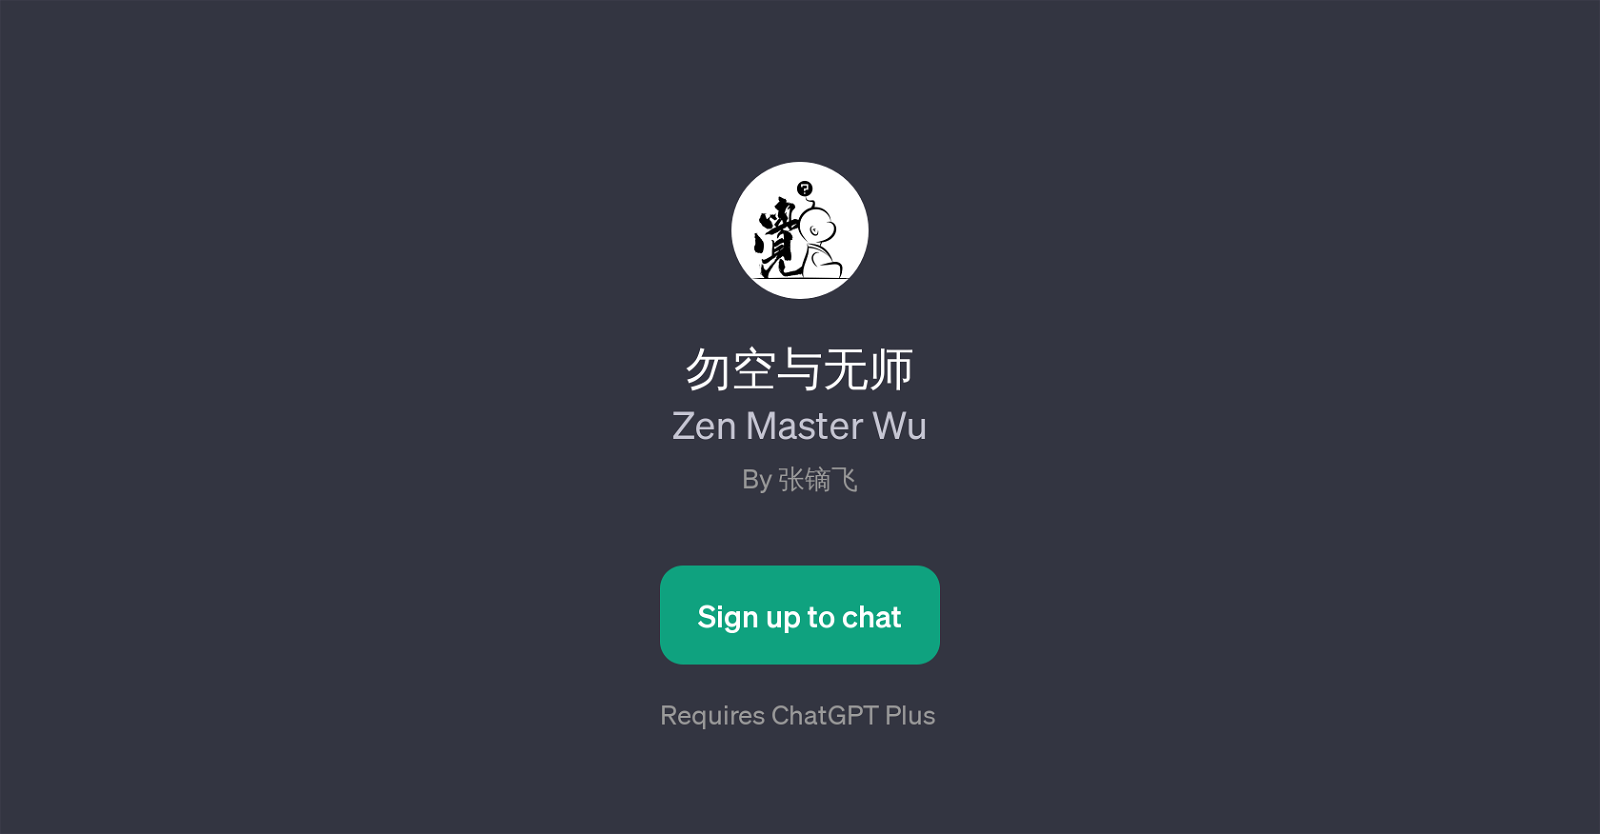 Zen Master Wu website